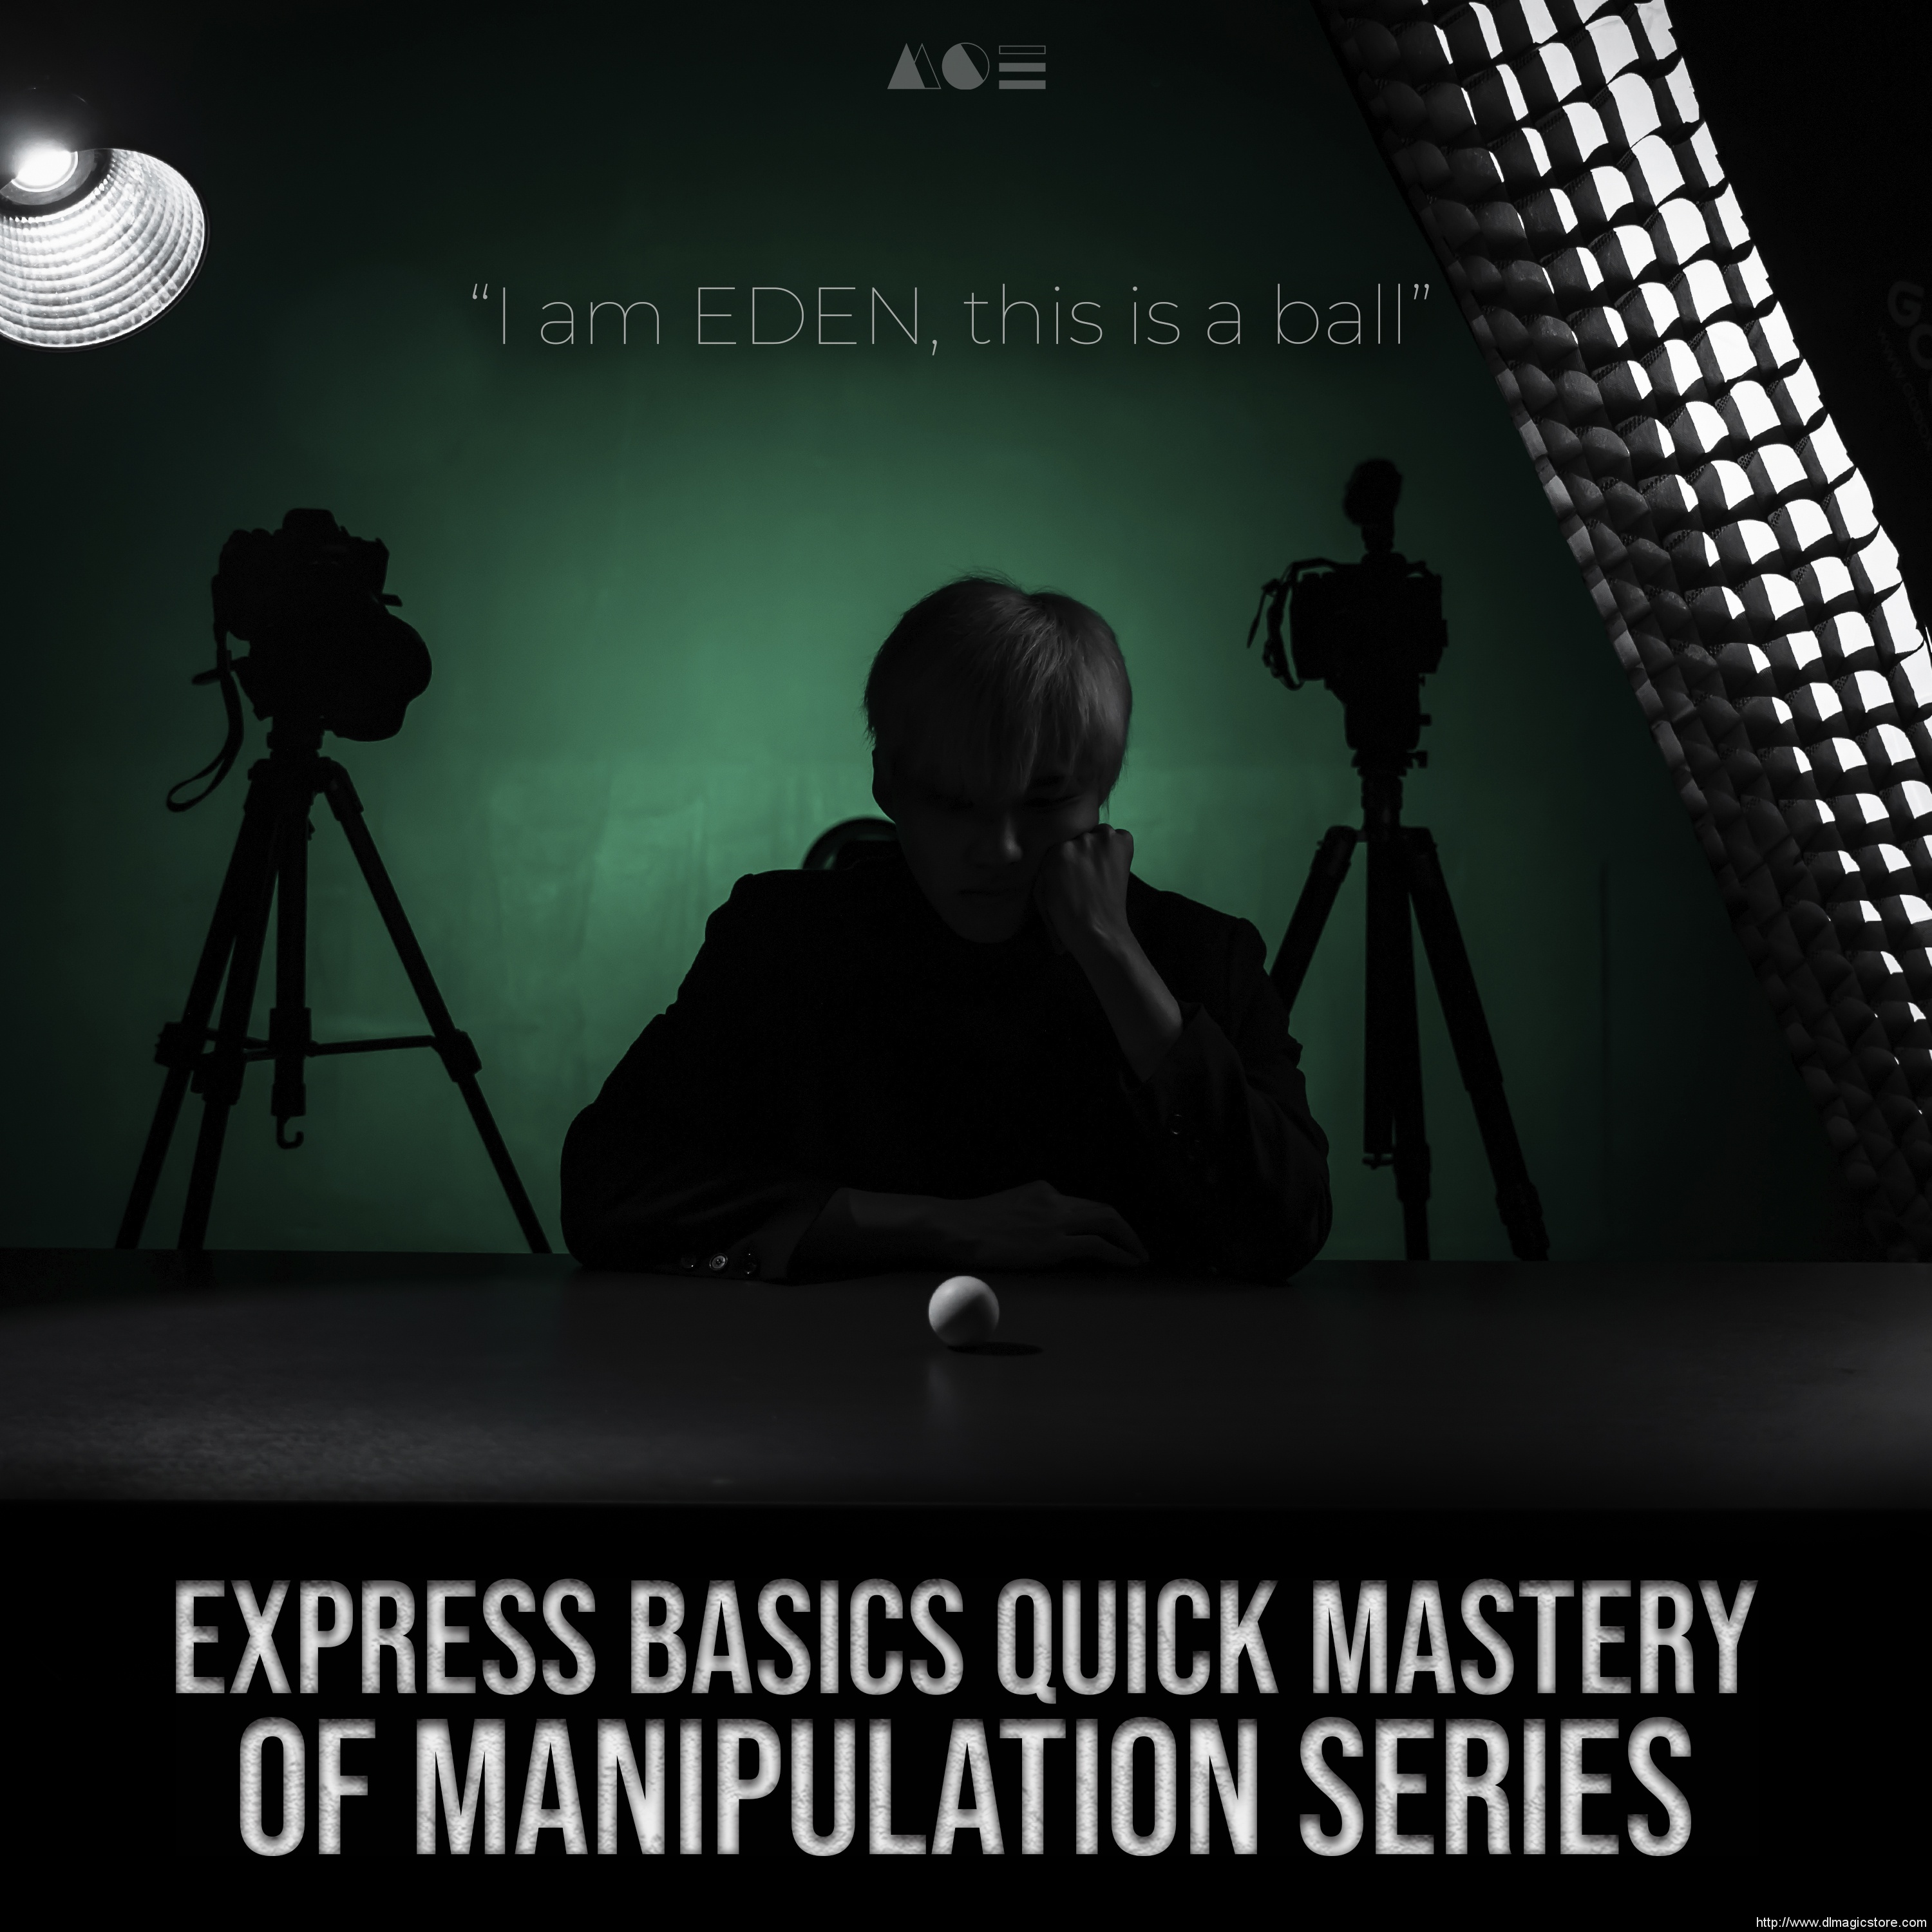 Express Basics Quick Mastery Of Manipulation Series ‘BALL’